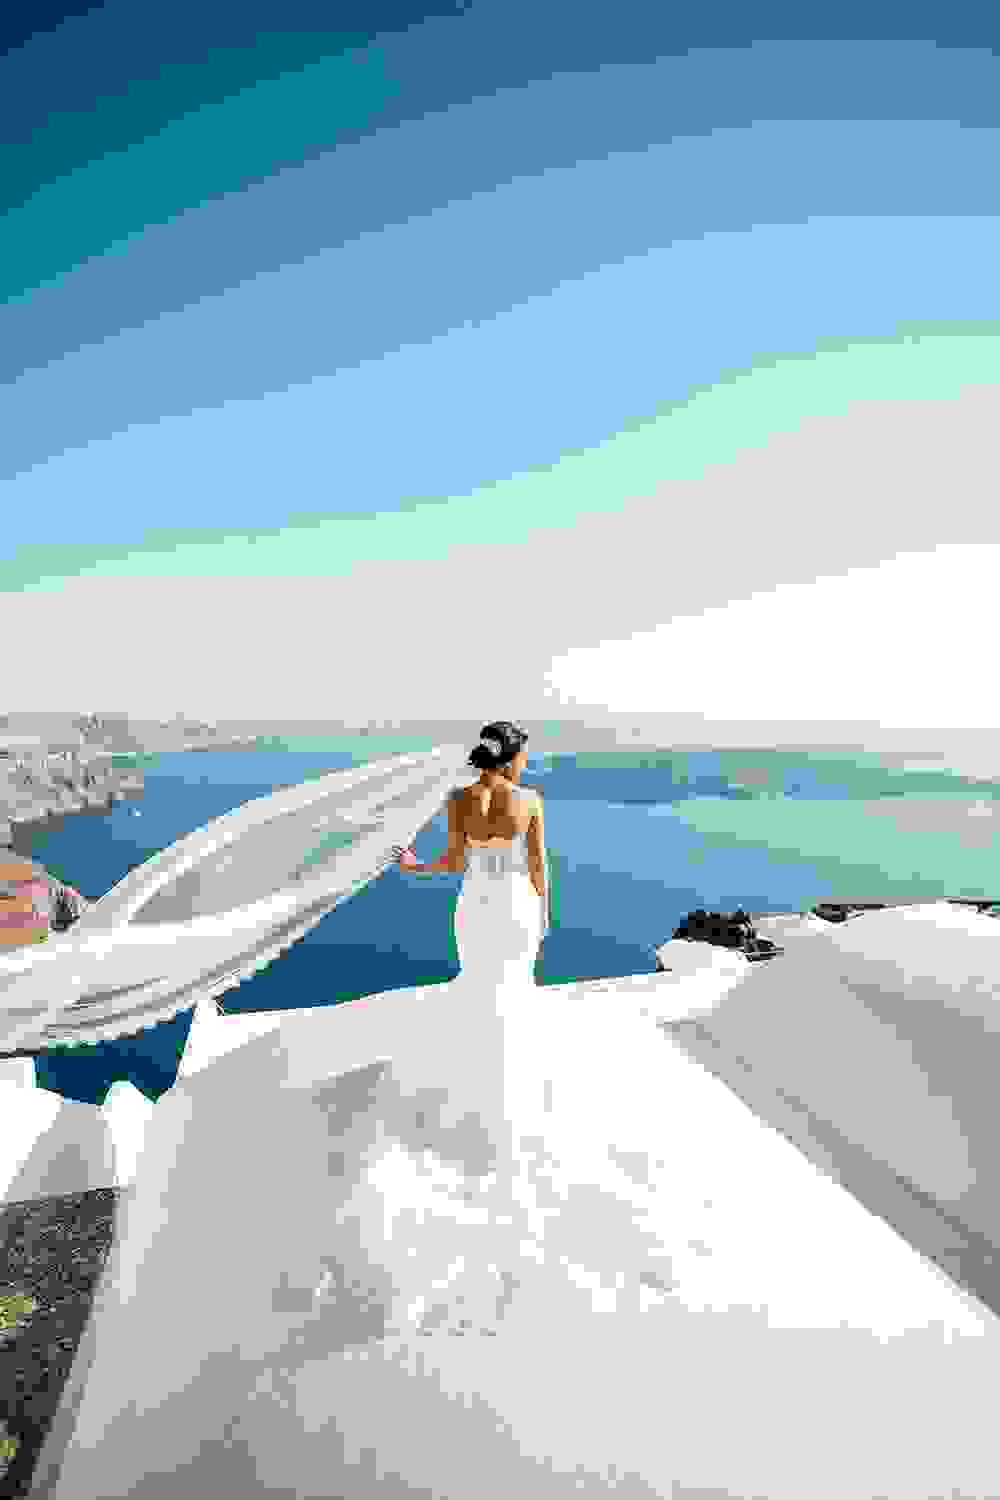 https://www.evarendl.com/weddings
Santorini bride